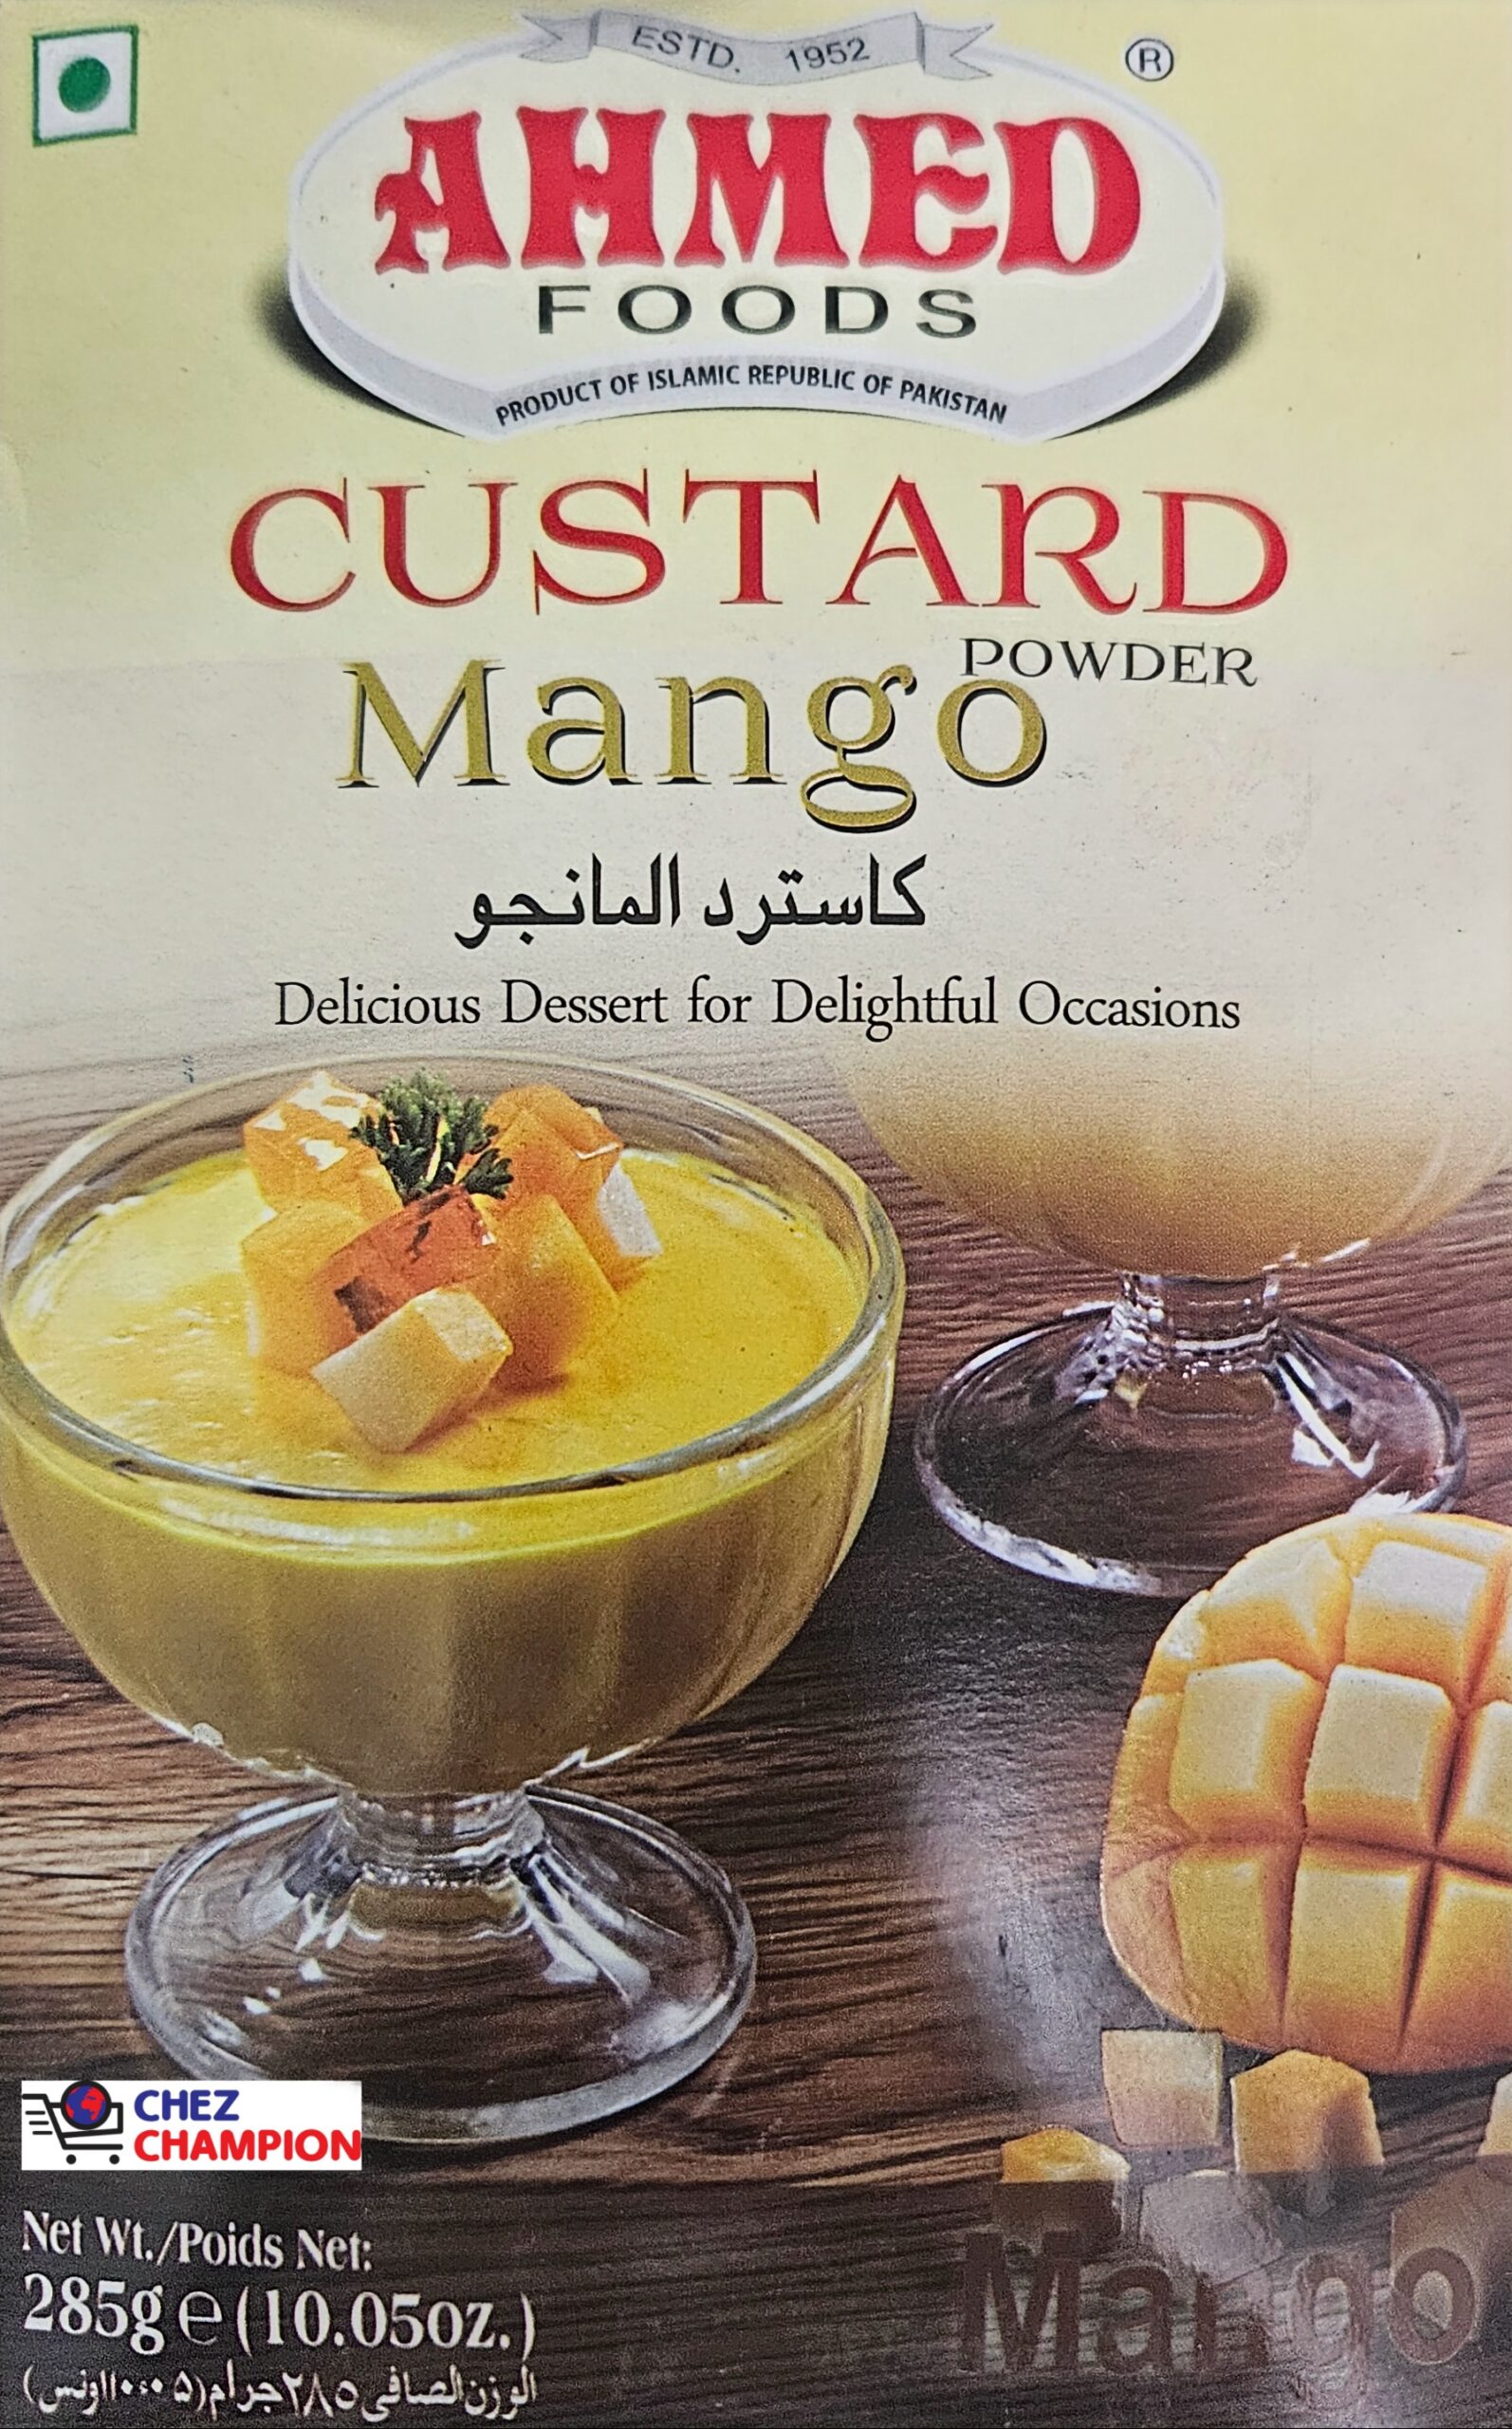 Ahmed custard powder mango- pudding de mangue – 285g